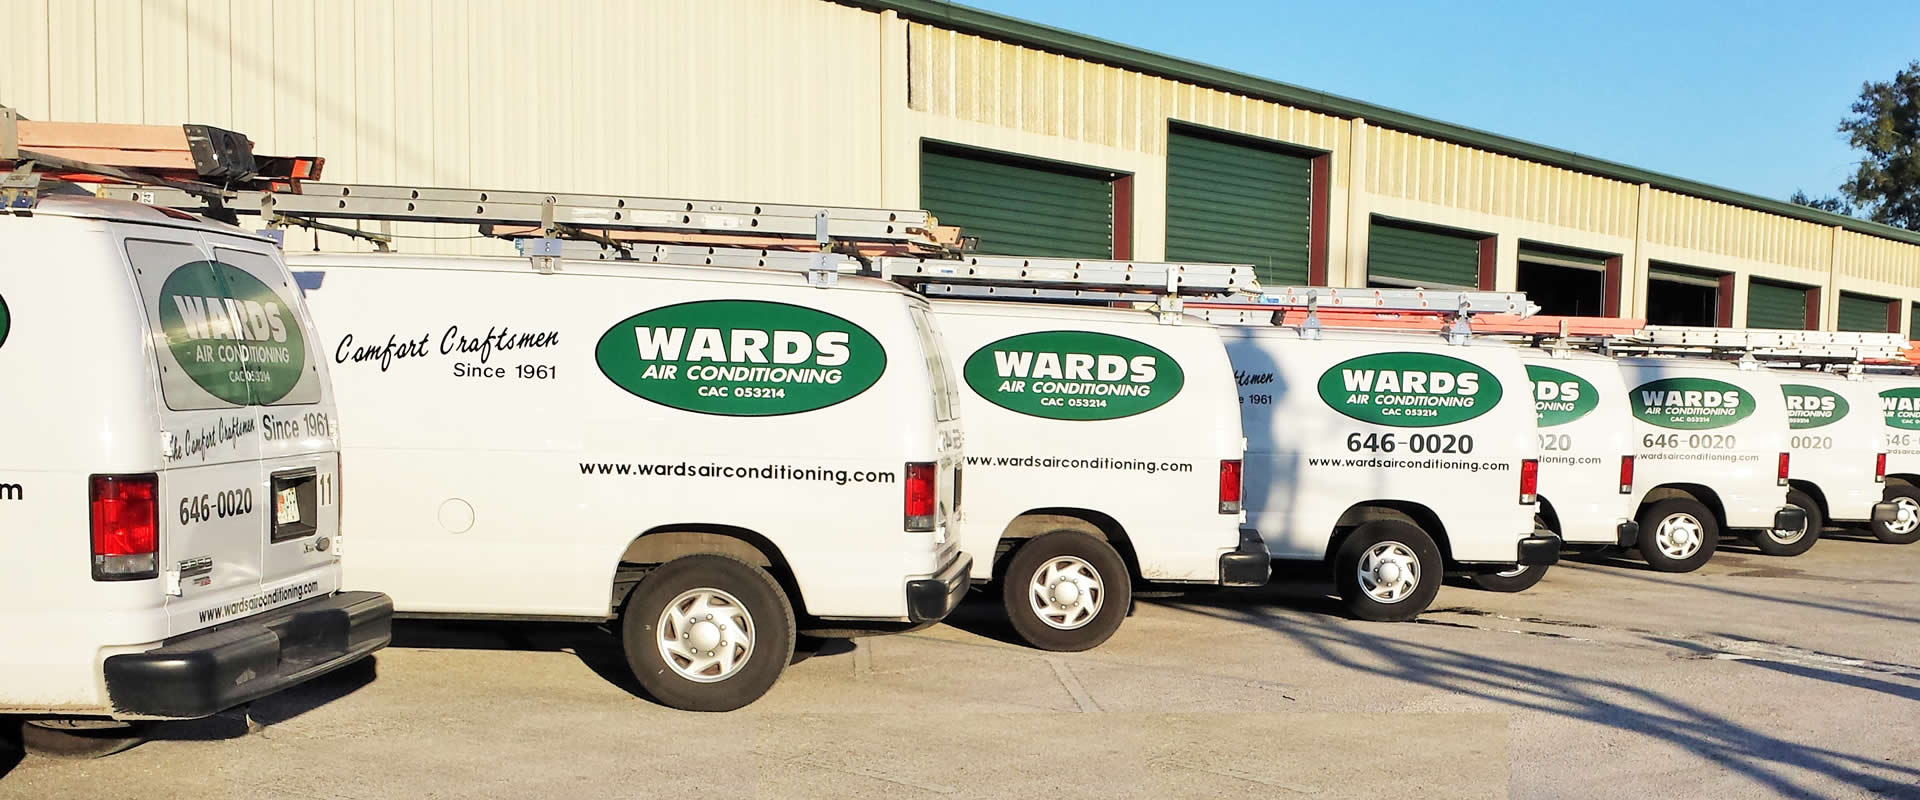 Wards Air Conditioning Company Vans